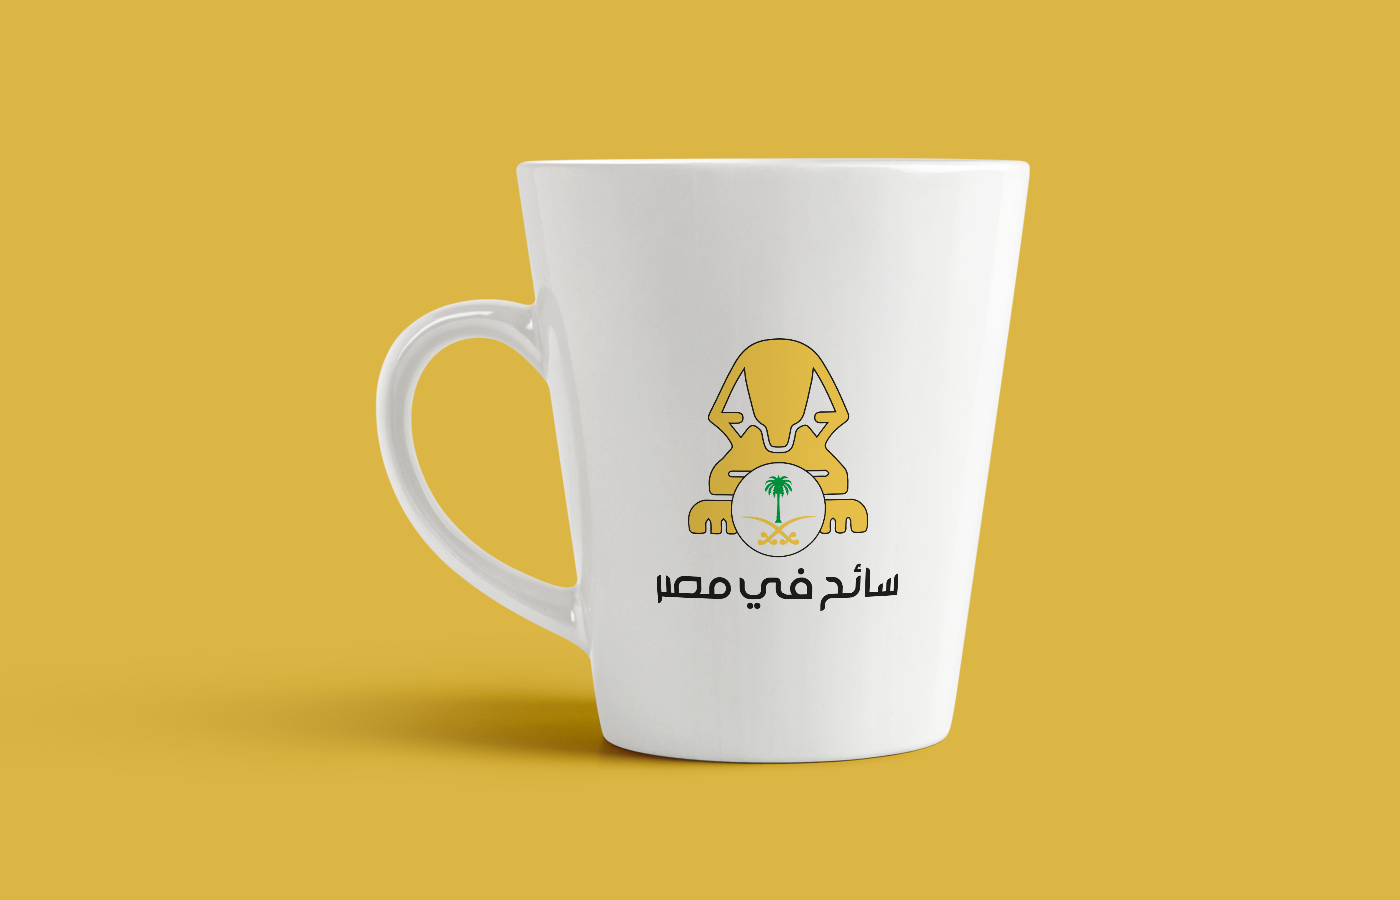 Sayah On Egypt Logo & Social Media